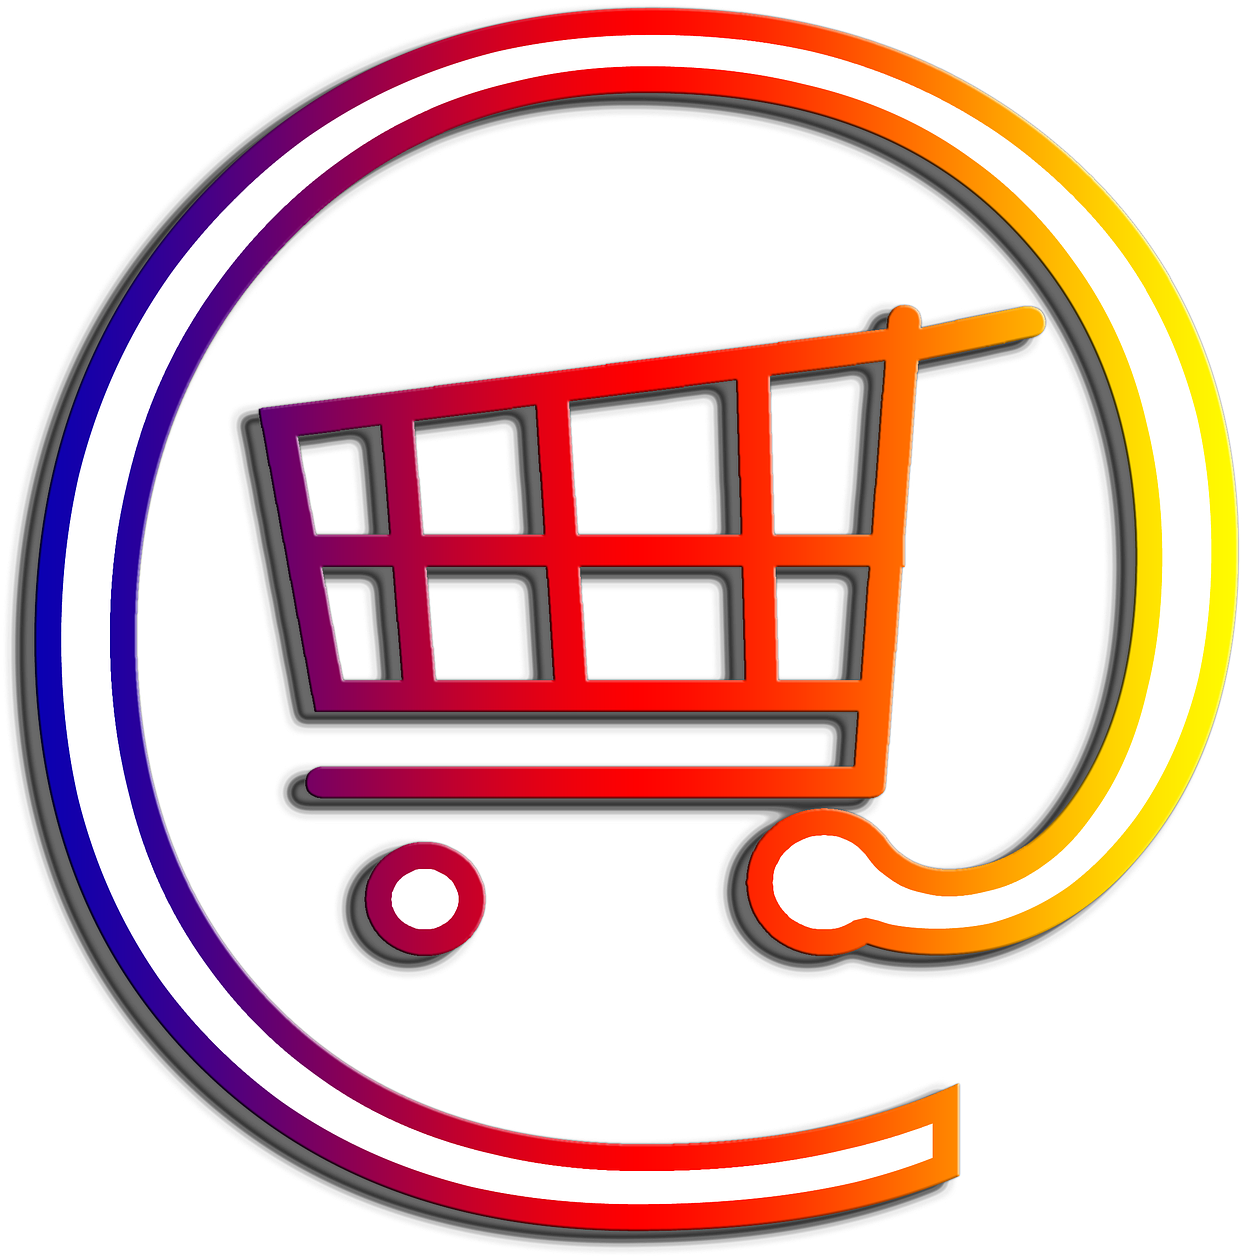 Интернет магазин универсал. Логотип интернет магазина. Эмблема для интернет магазина. Интернет магазин лого. Картинки для логотипа интернет магазина.